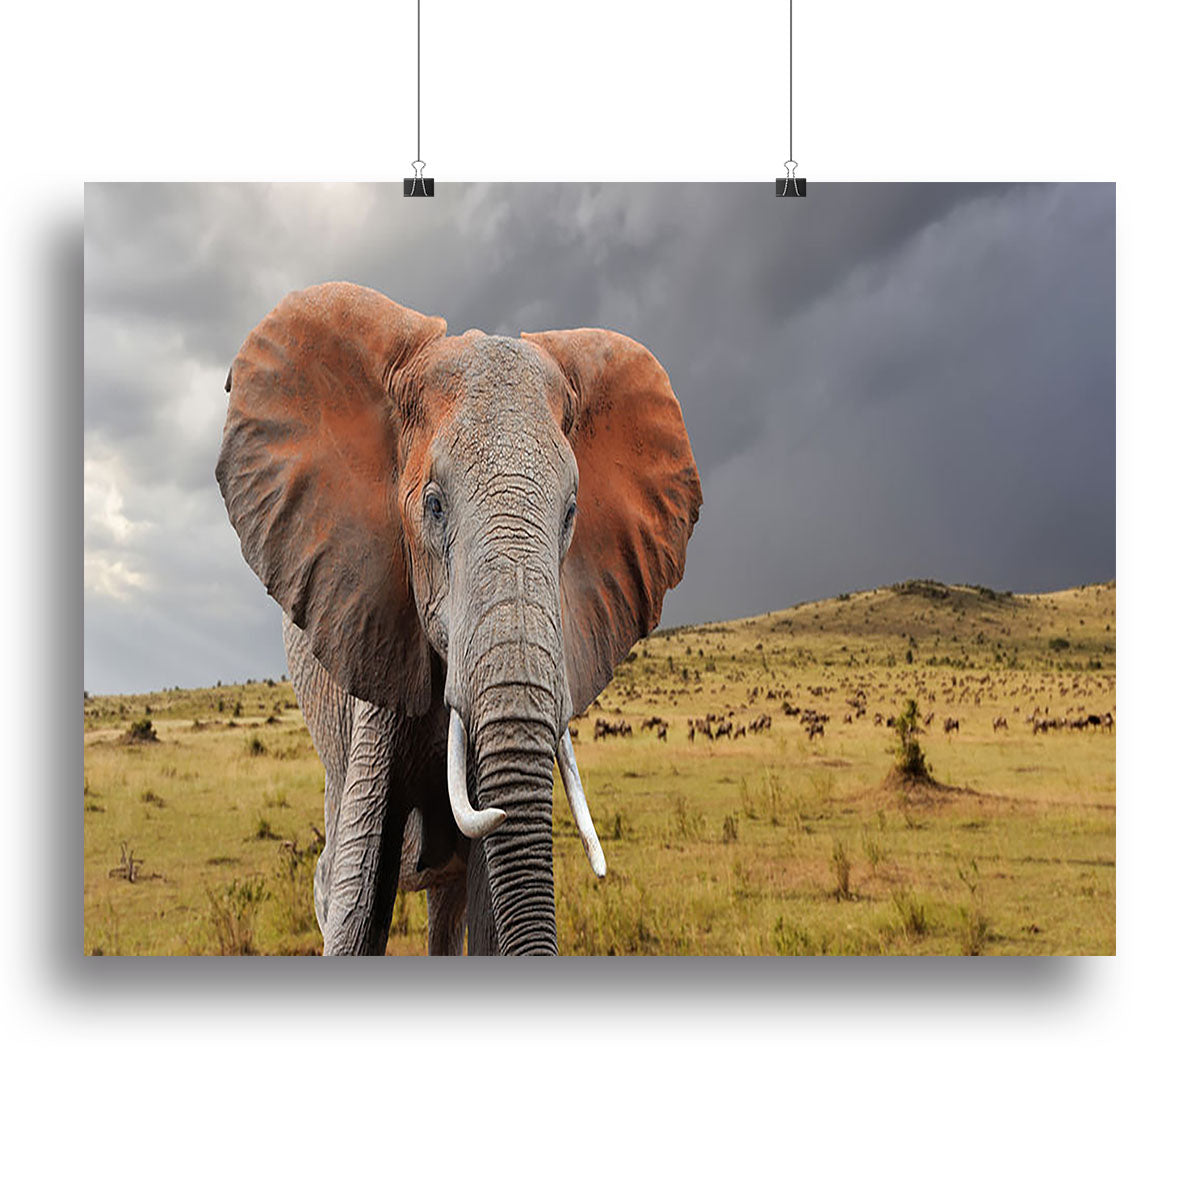 Elephant in National park of Kenya Canvas Print or Poster - Canvas Art Rocks - 2